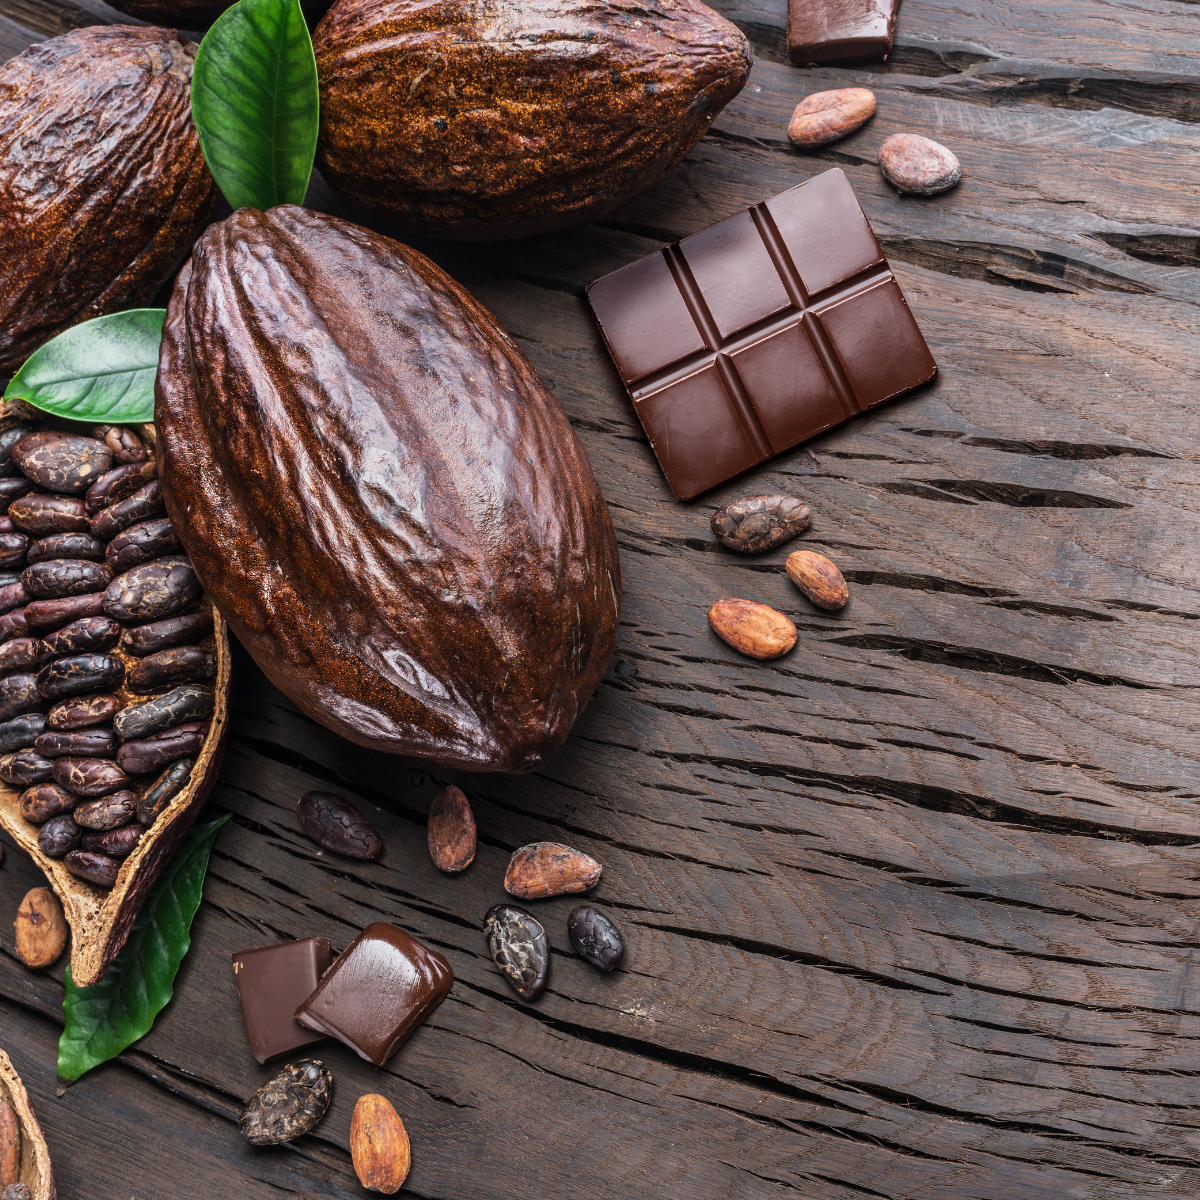 Our Peru coffee capsules taste like chocolate and caramel